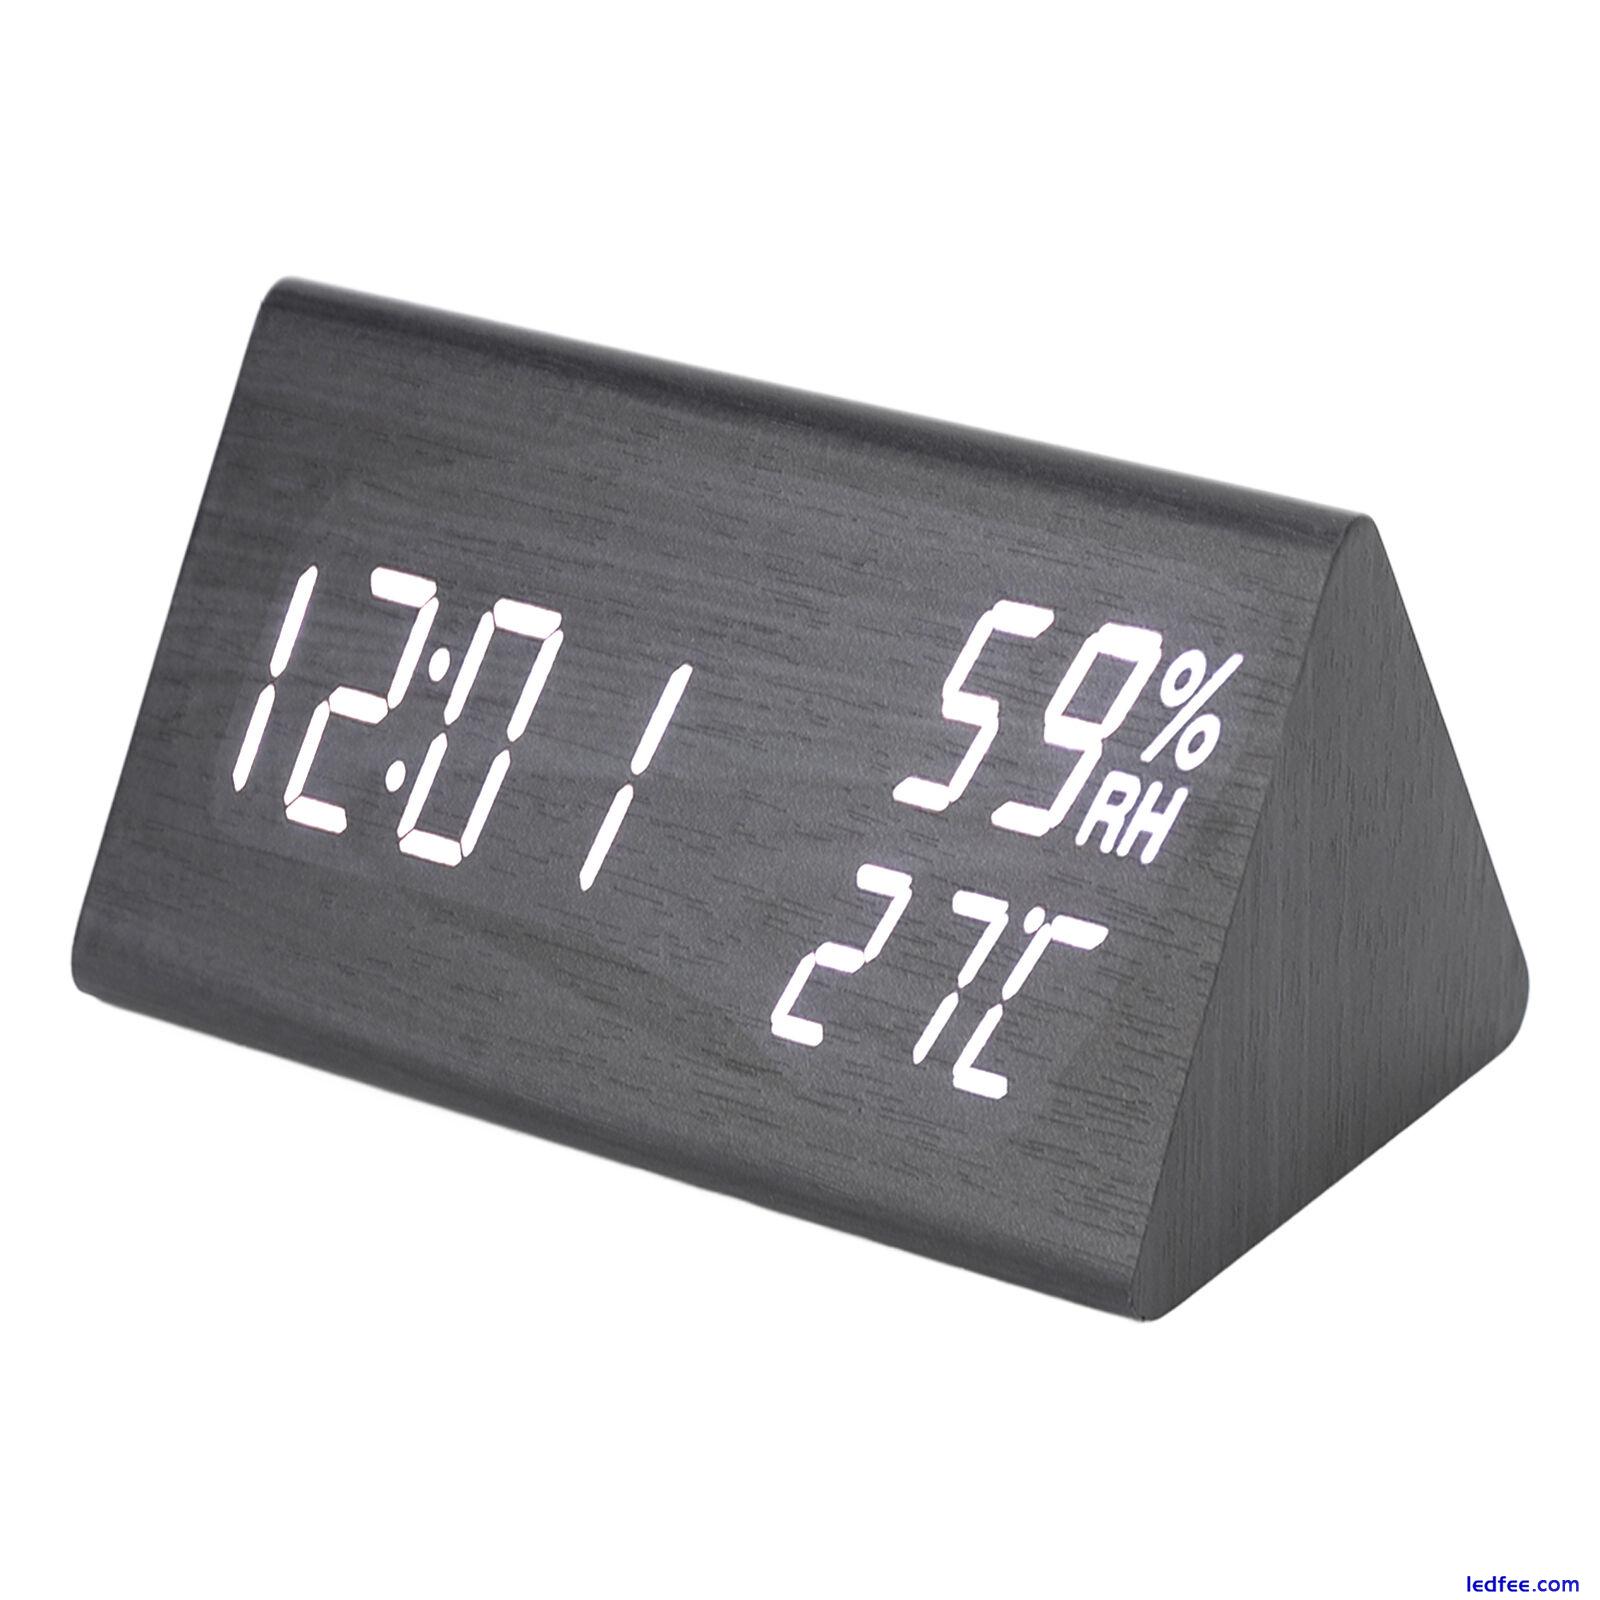 Wooden Digital Alarm Clock Triangular Voice Control Electronic LED Clock WAS 0 